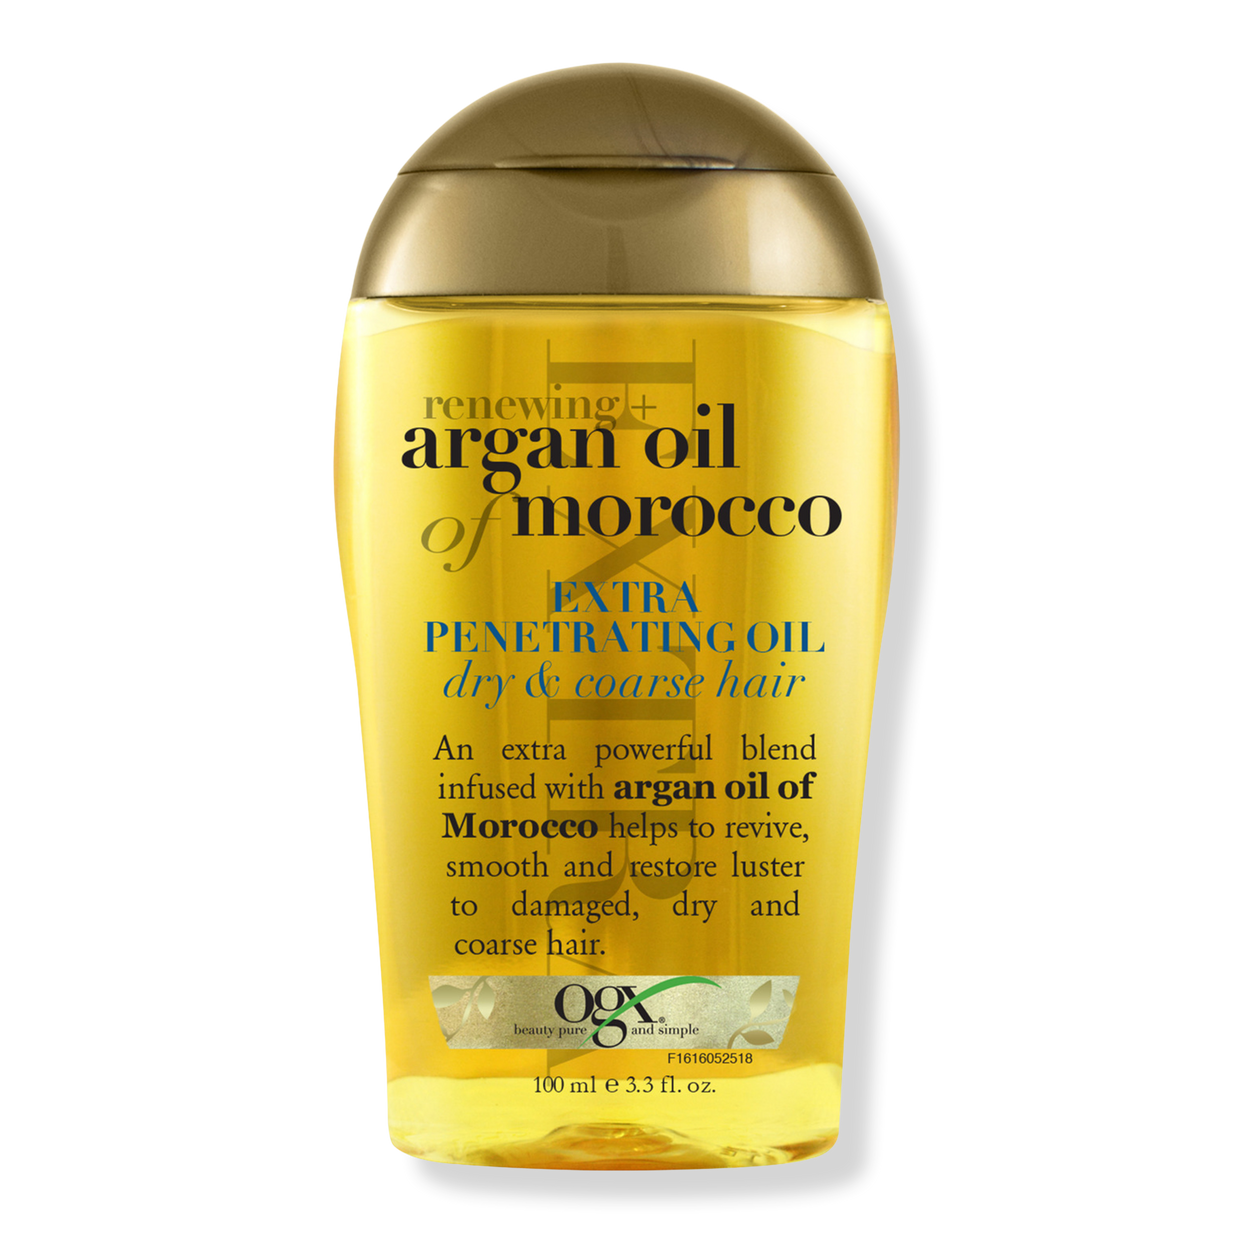 Renewing + Argan Oil of Morocco Extra Penetrating Oil - OGX | Ulta